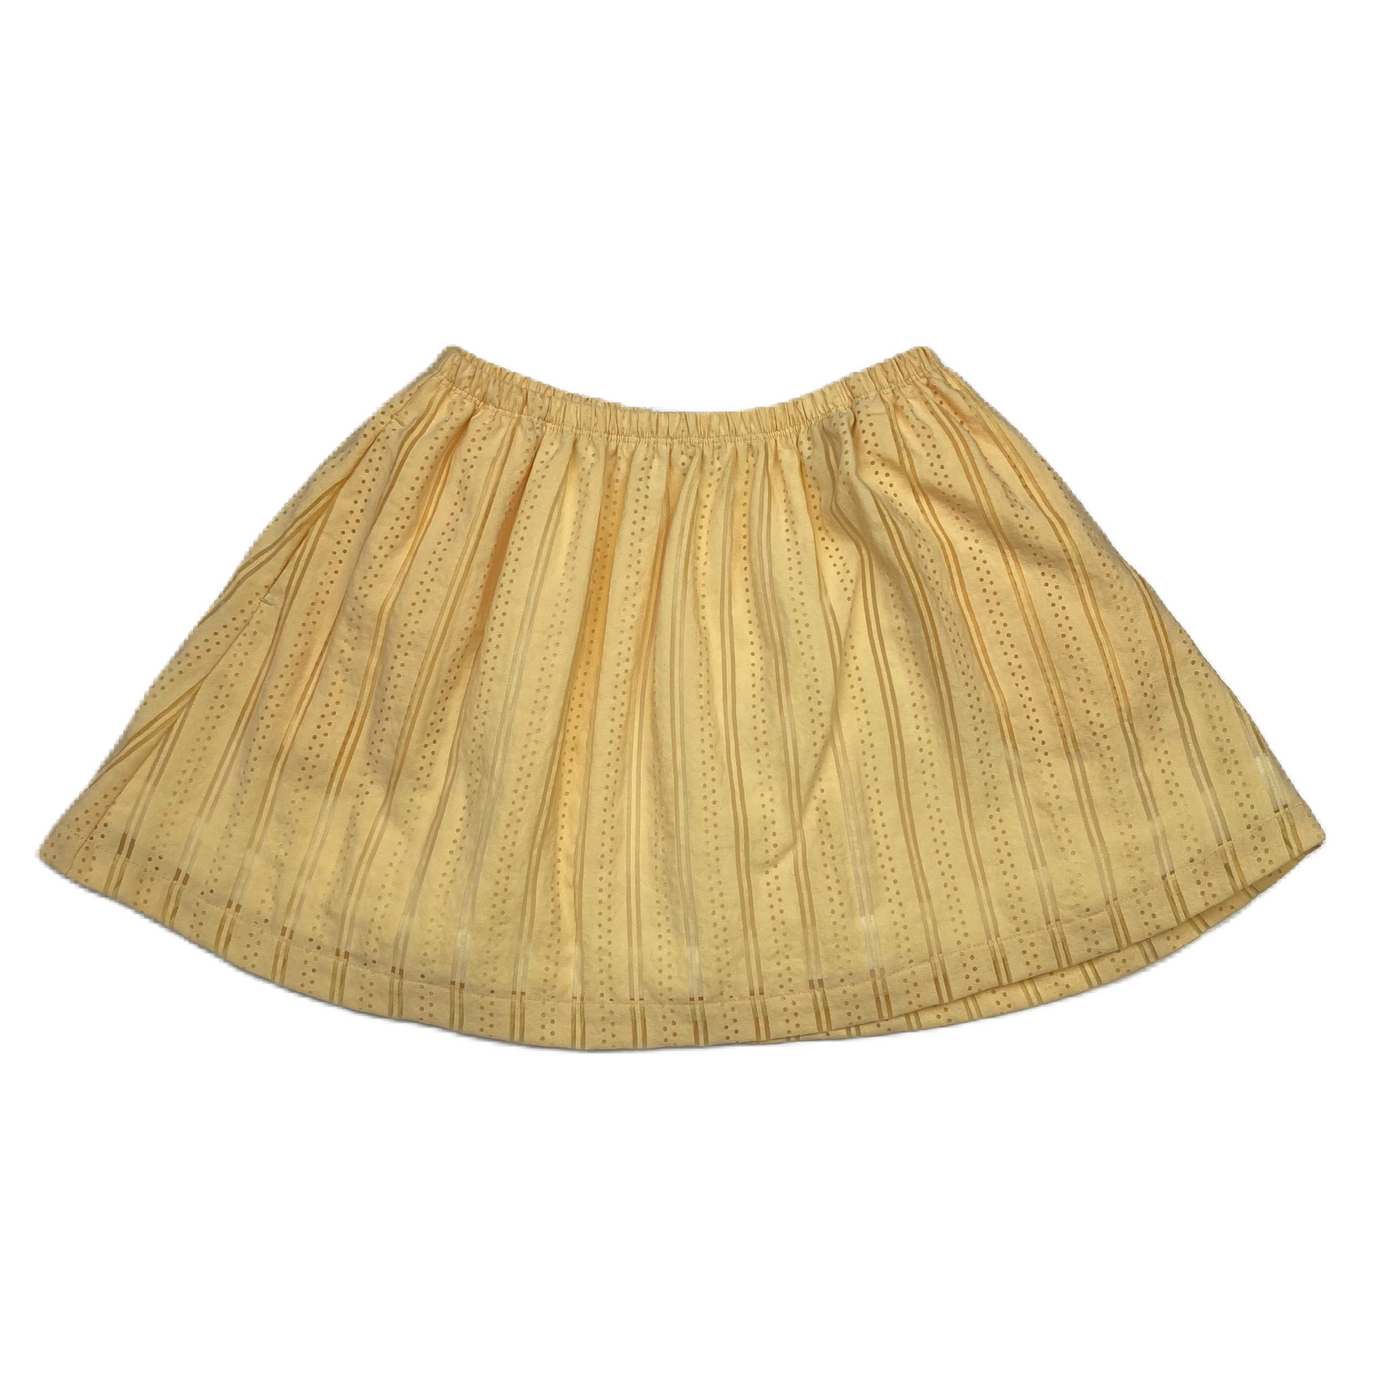 Repose AMS - Ajour Skirt Yellow 8y